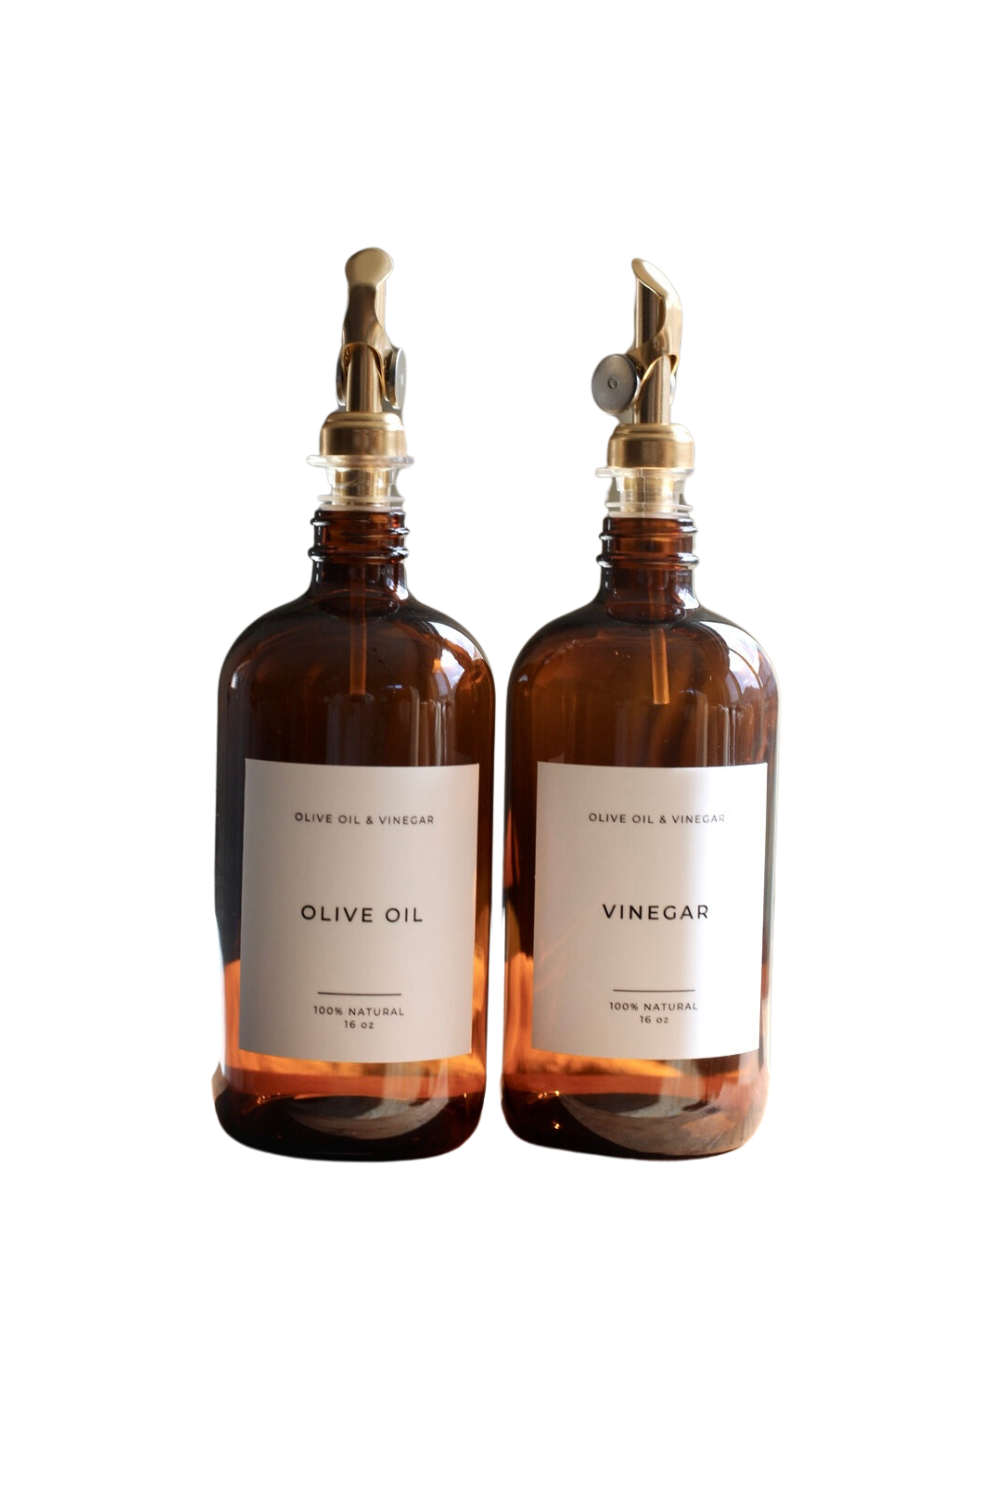 Olive & Vinegar Glass Amber Bottles - Luxe B Co Vintage Home Decor Shop Luxe B Co Instagram